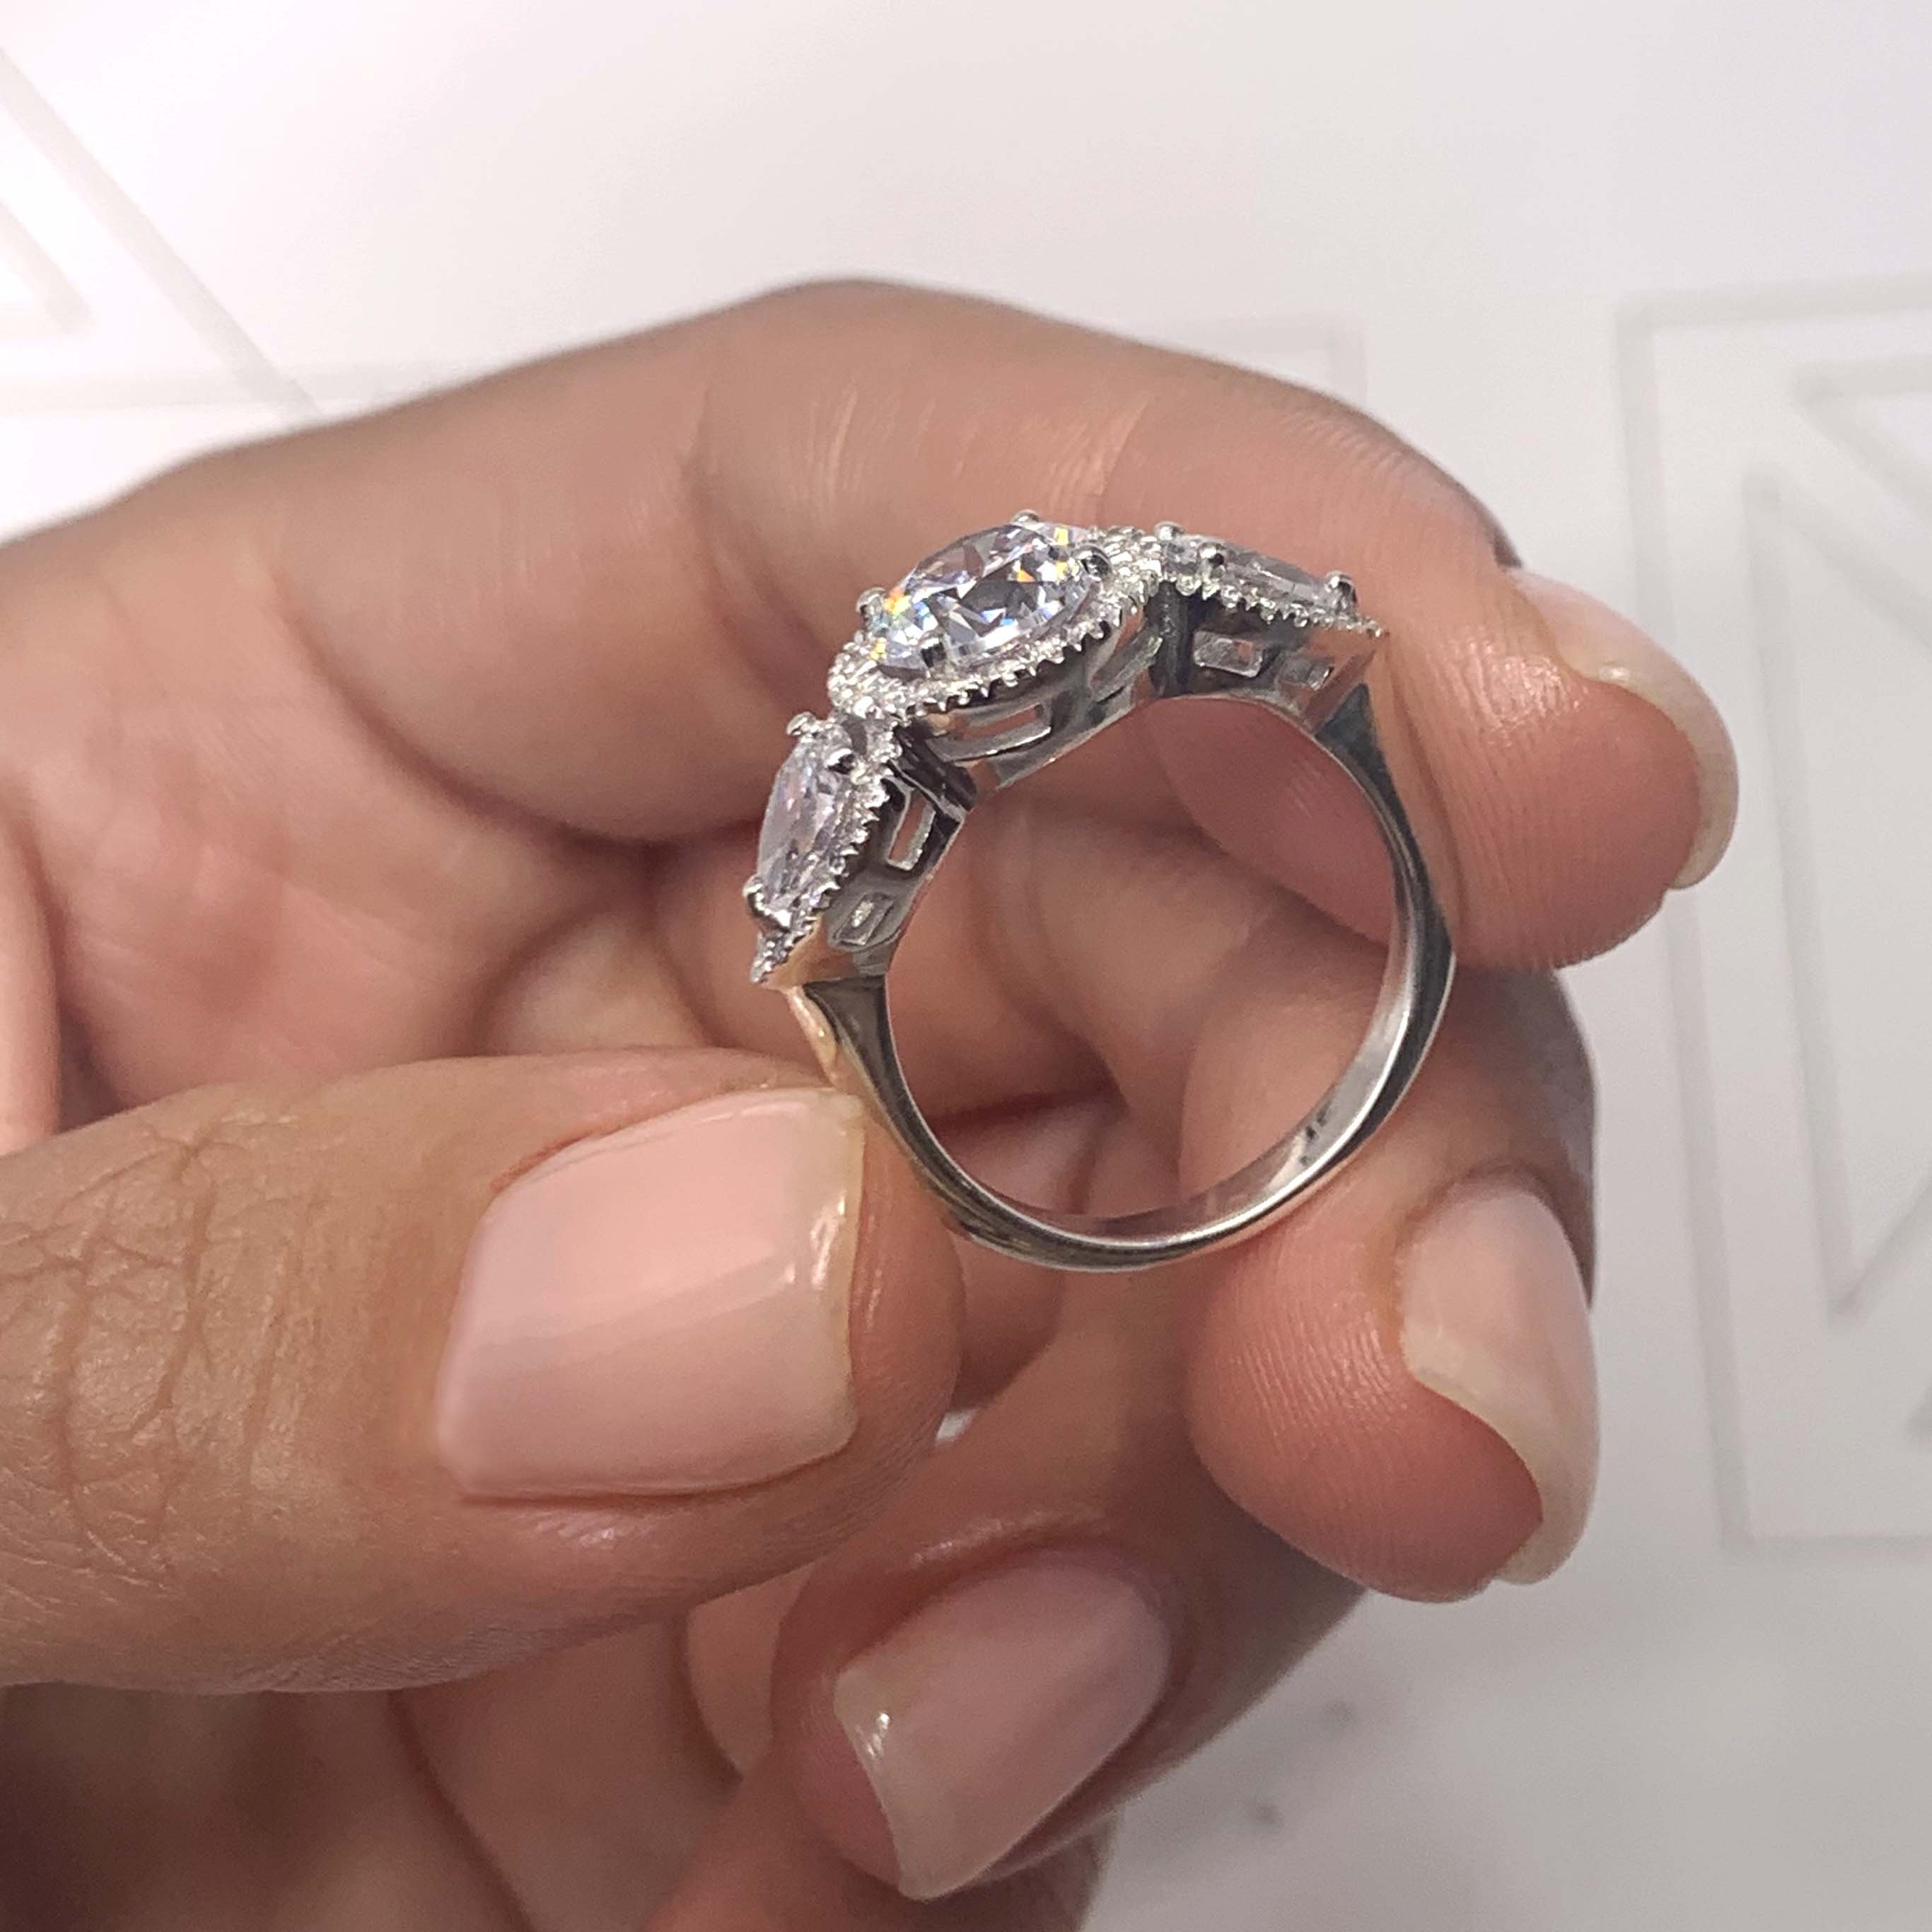 Glory Diamond Engagement Ring   (2.5 Carat) -14K White Gold